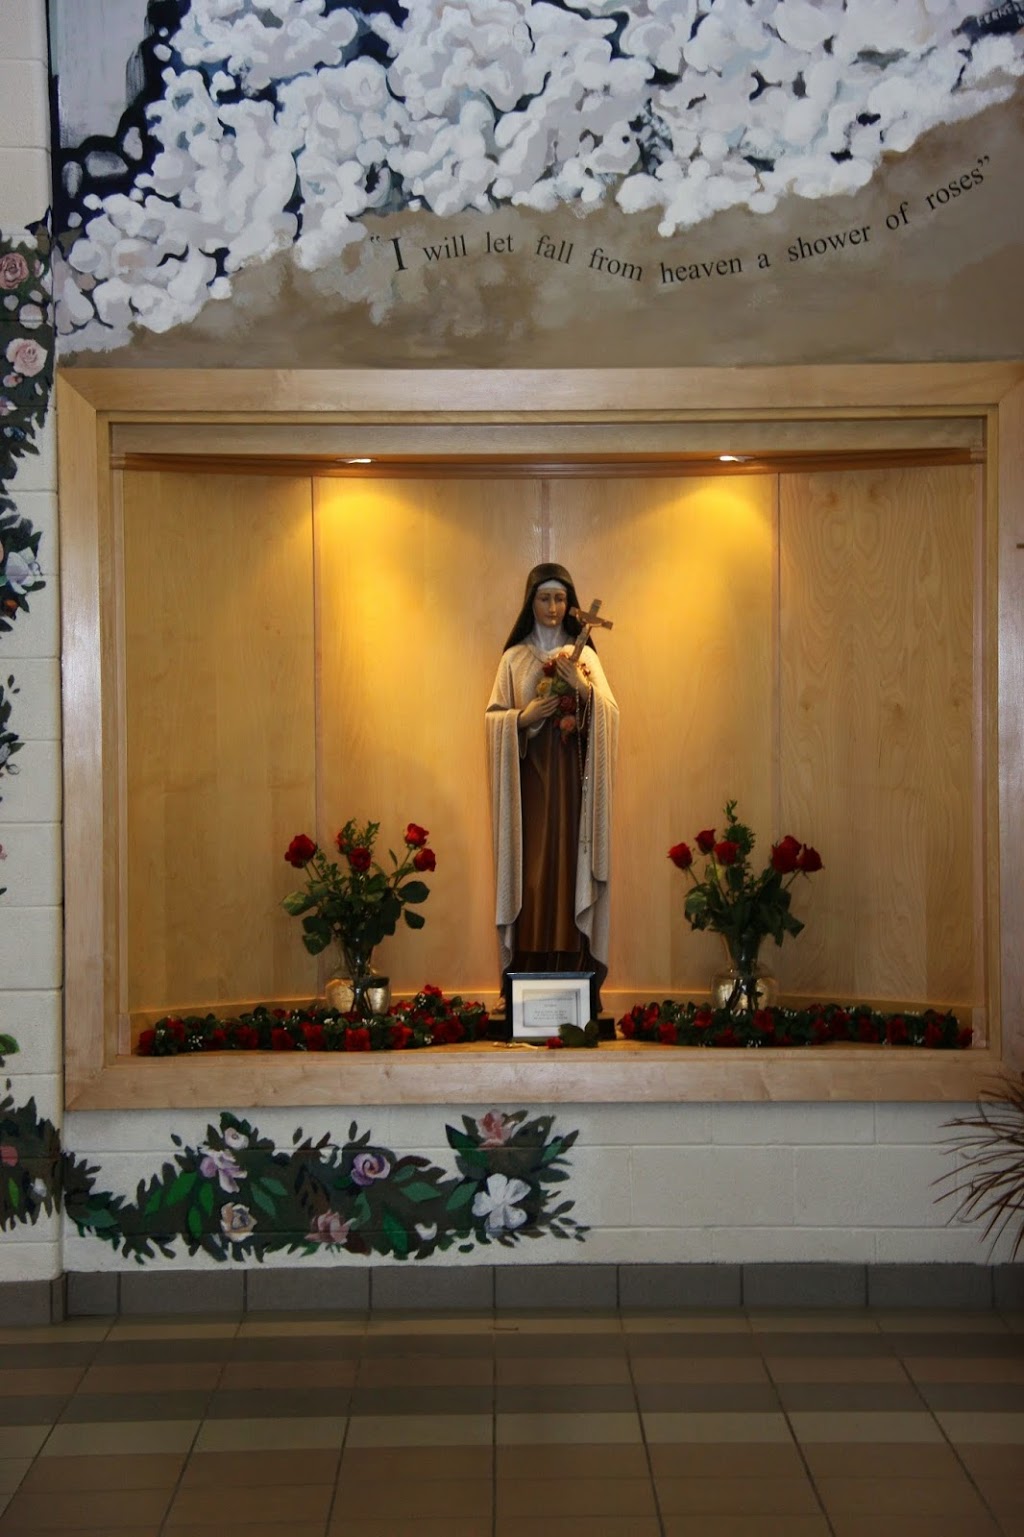 St Therese of Lisieux Catholic School | 1760 Garth St, Hamilton, ON L9B 2X5, Canada | Phone: (905) 523-2335